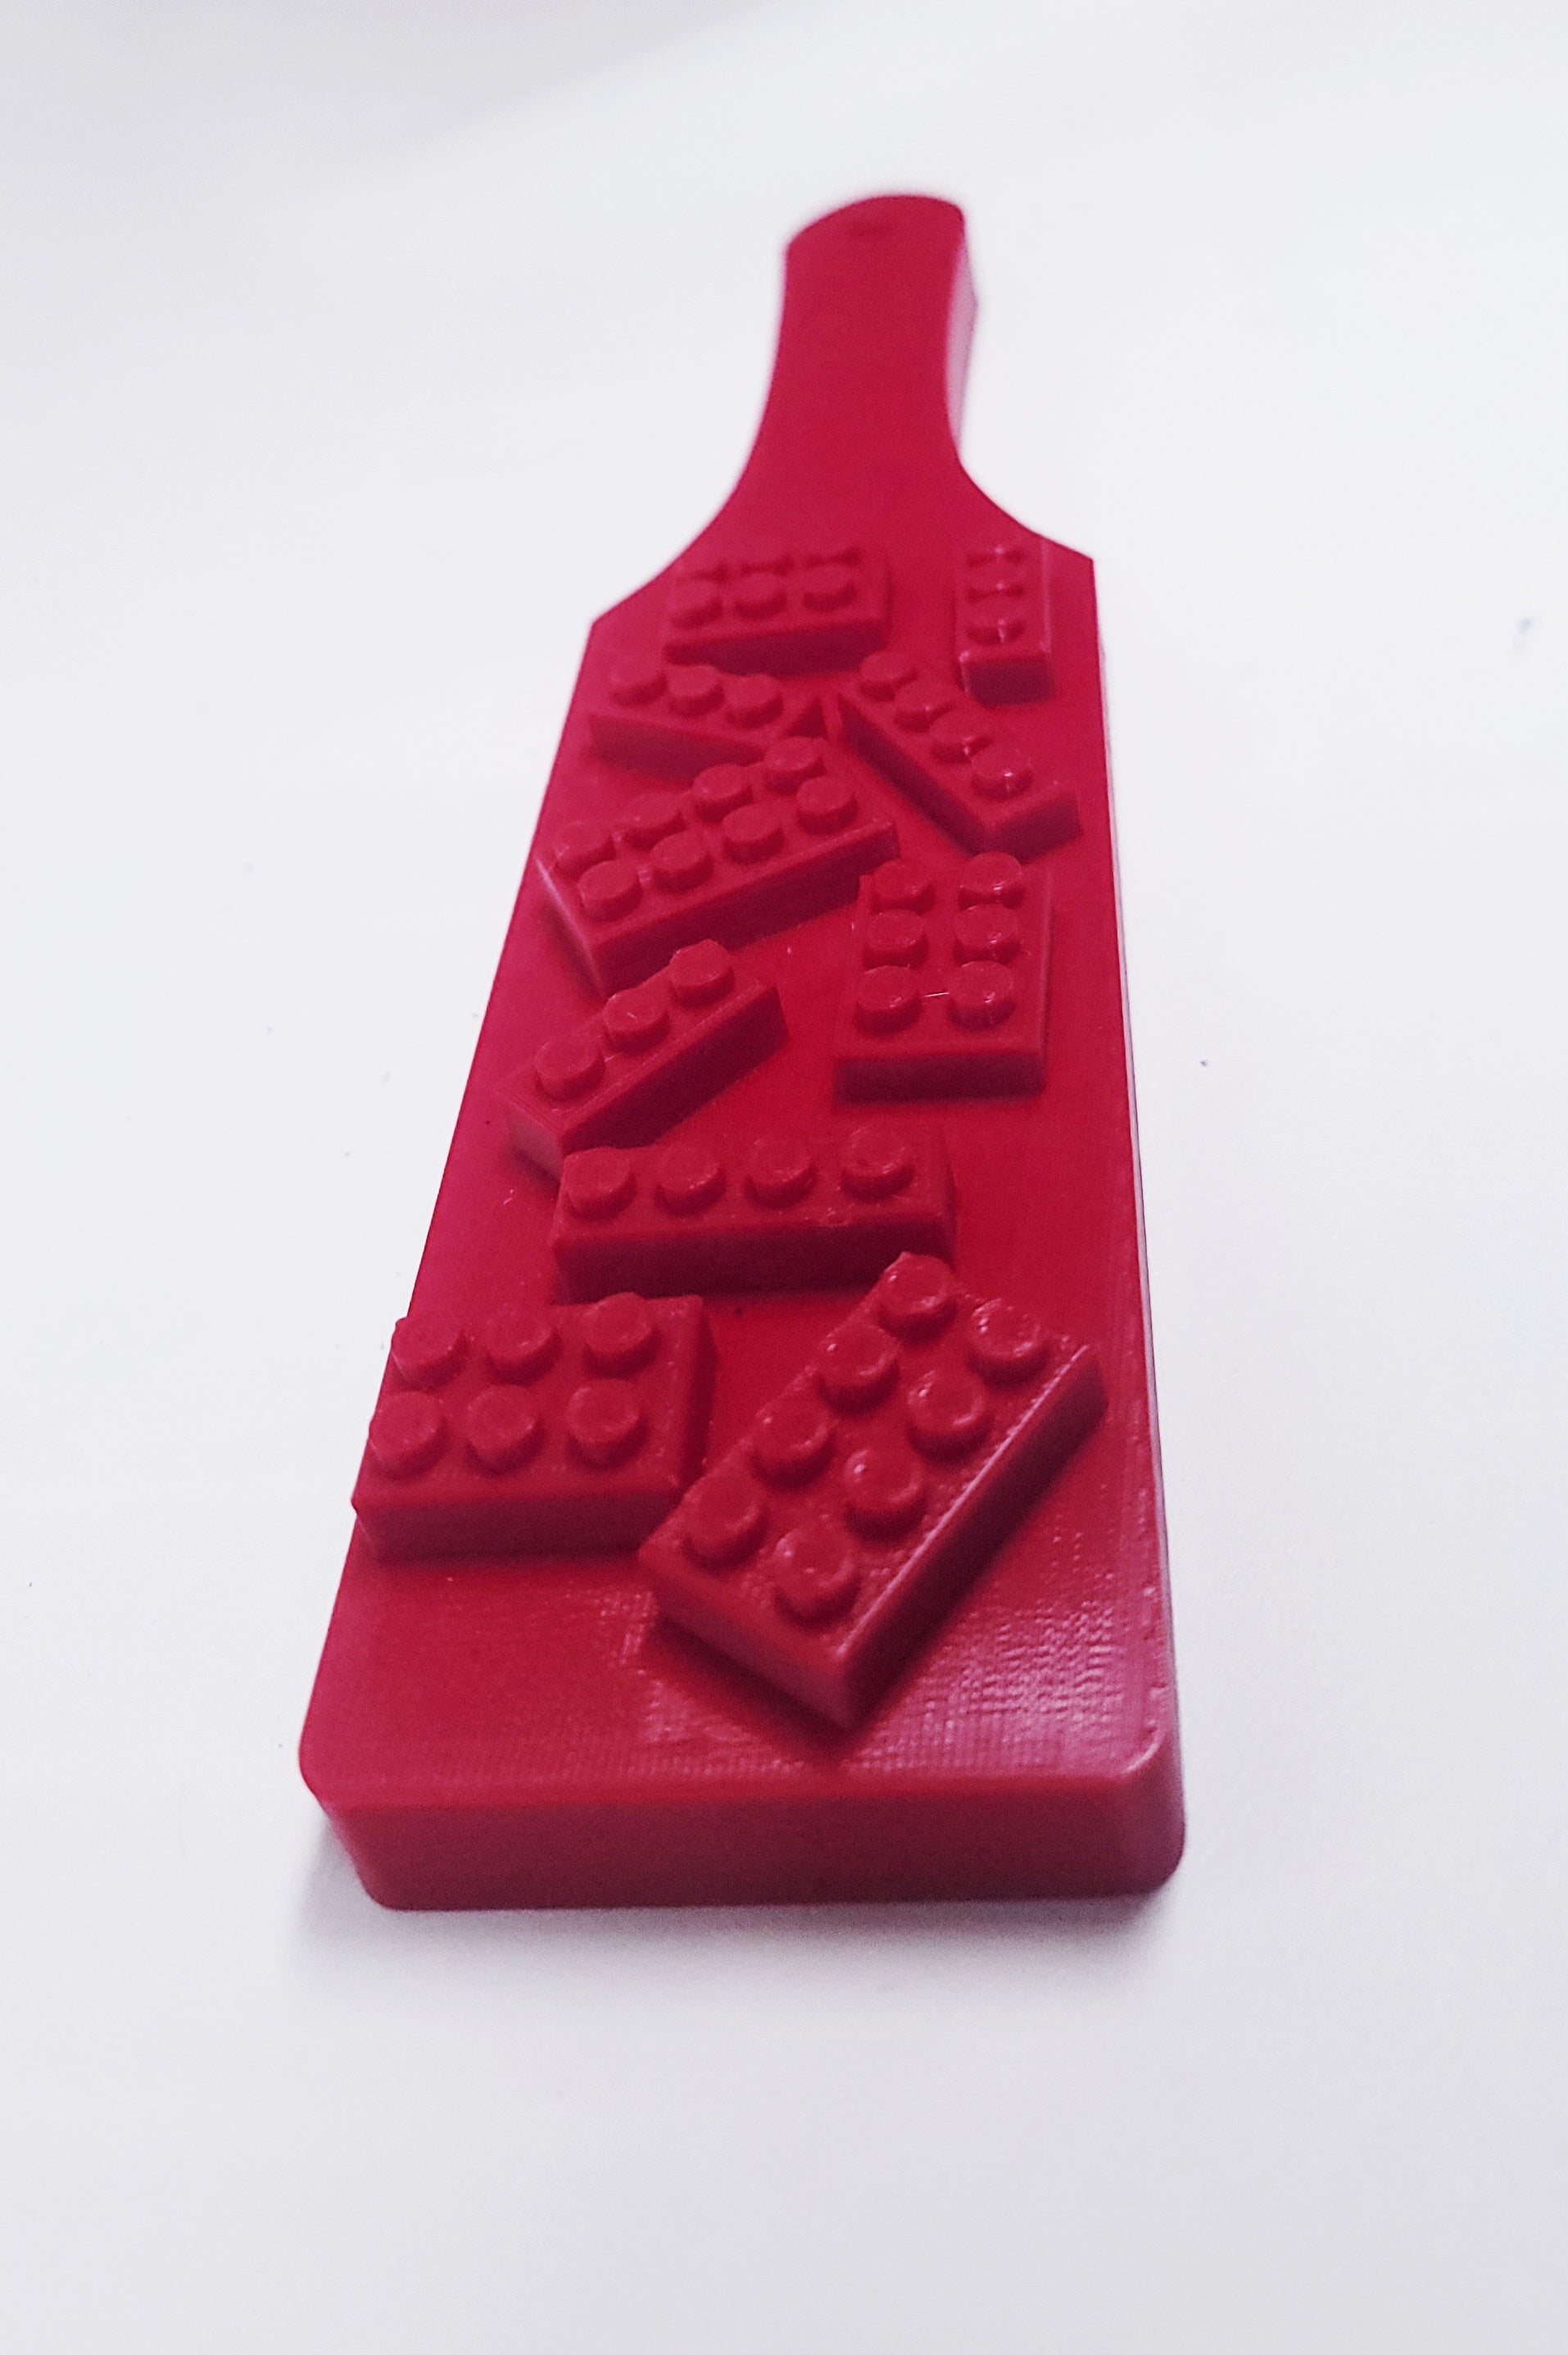 red plastic paddle with lego like bricks